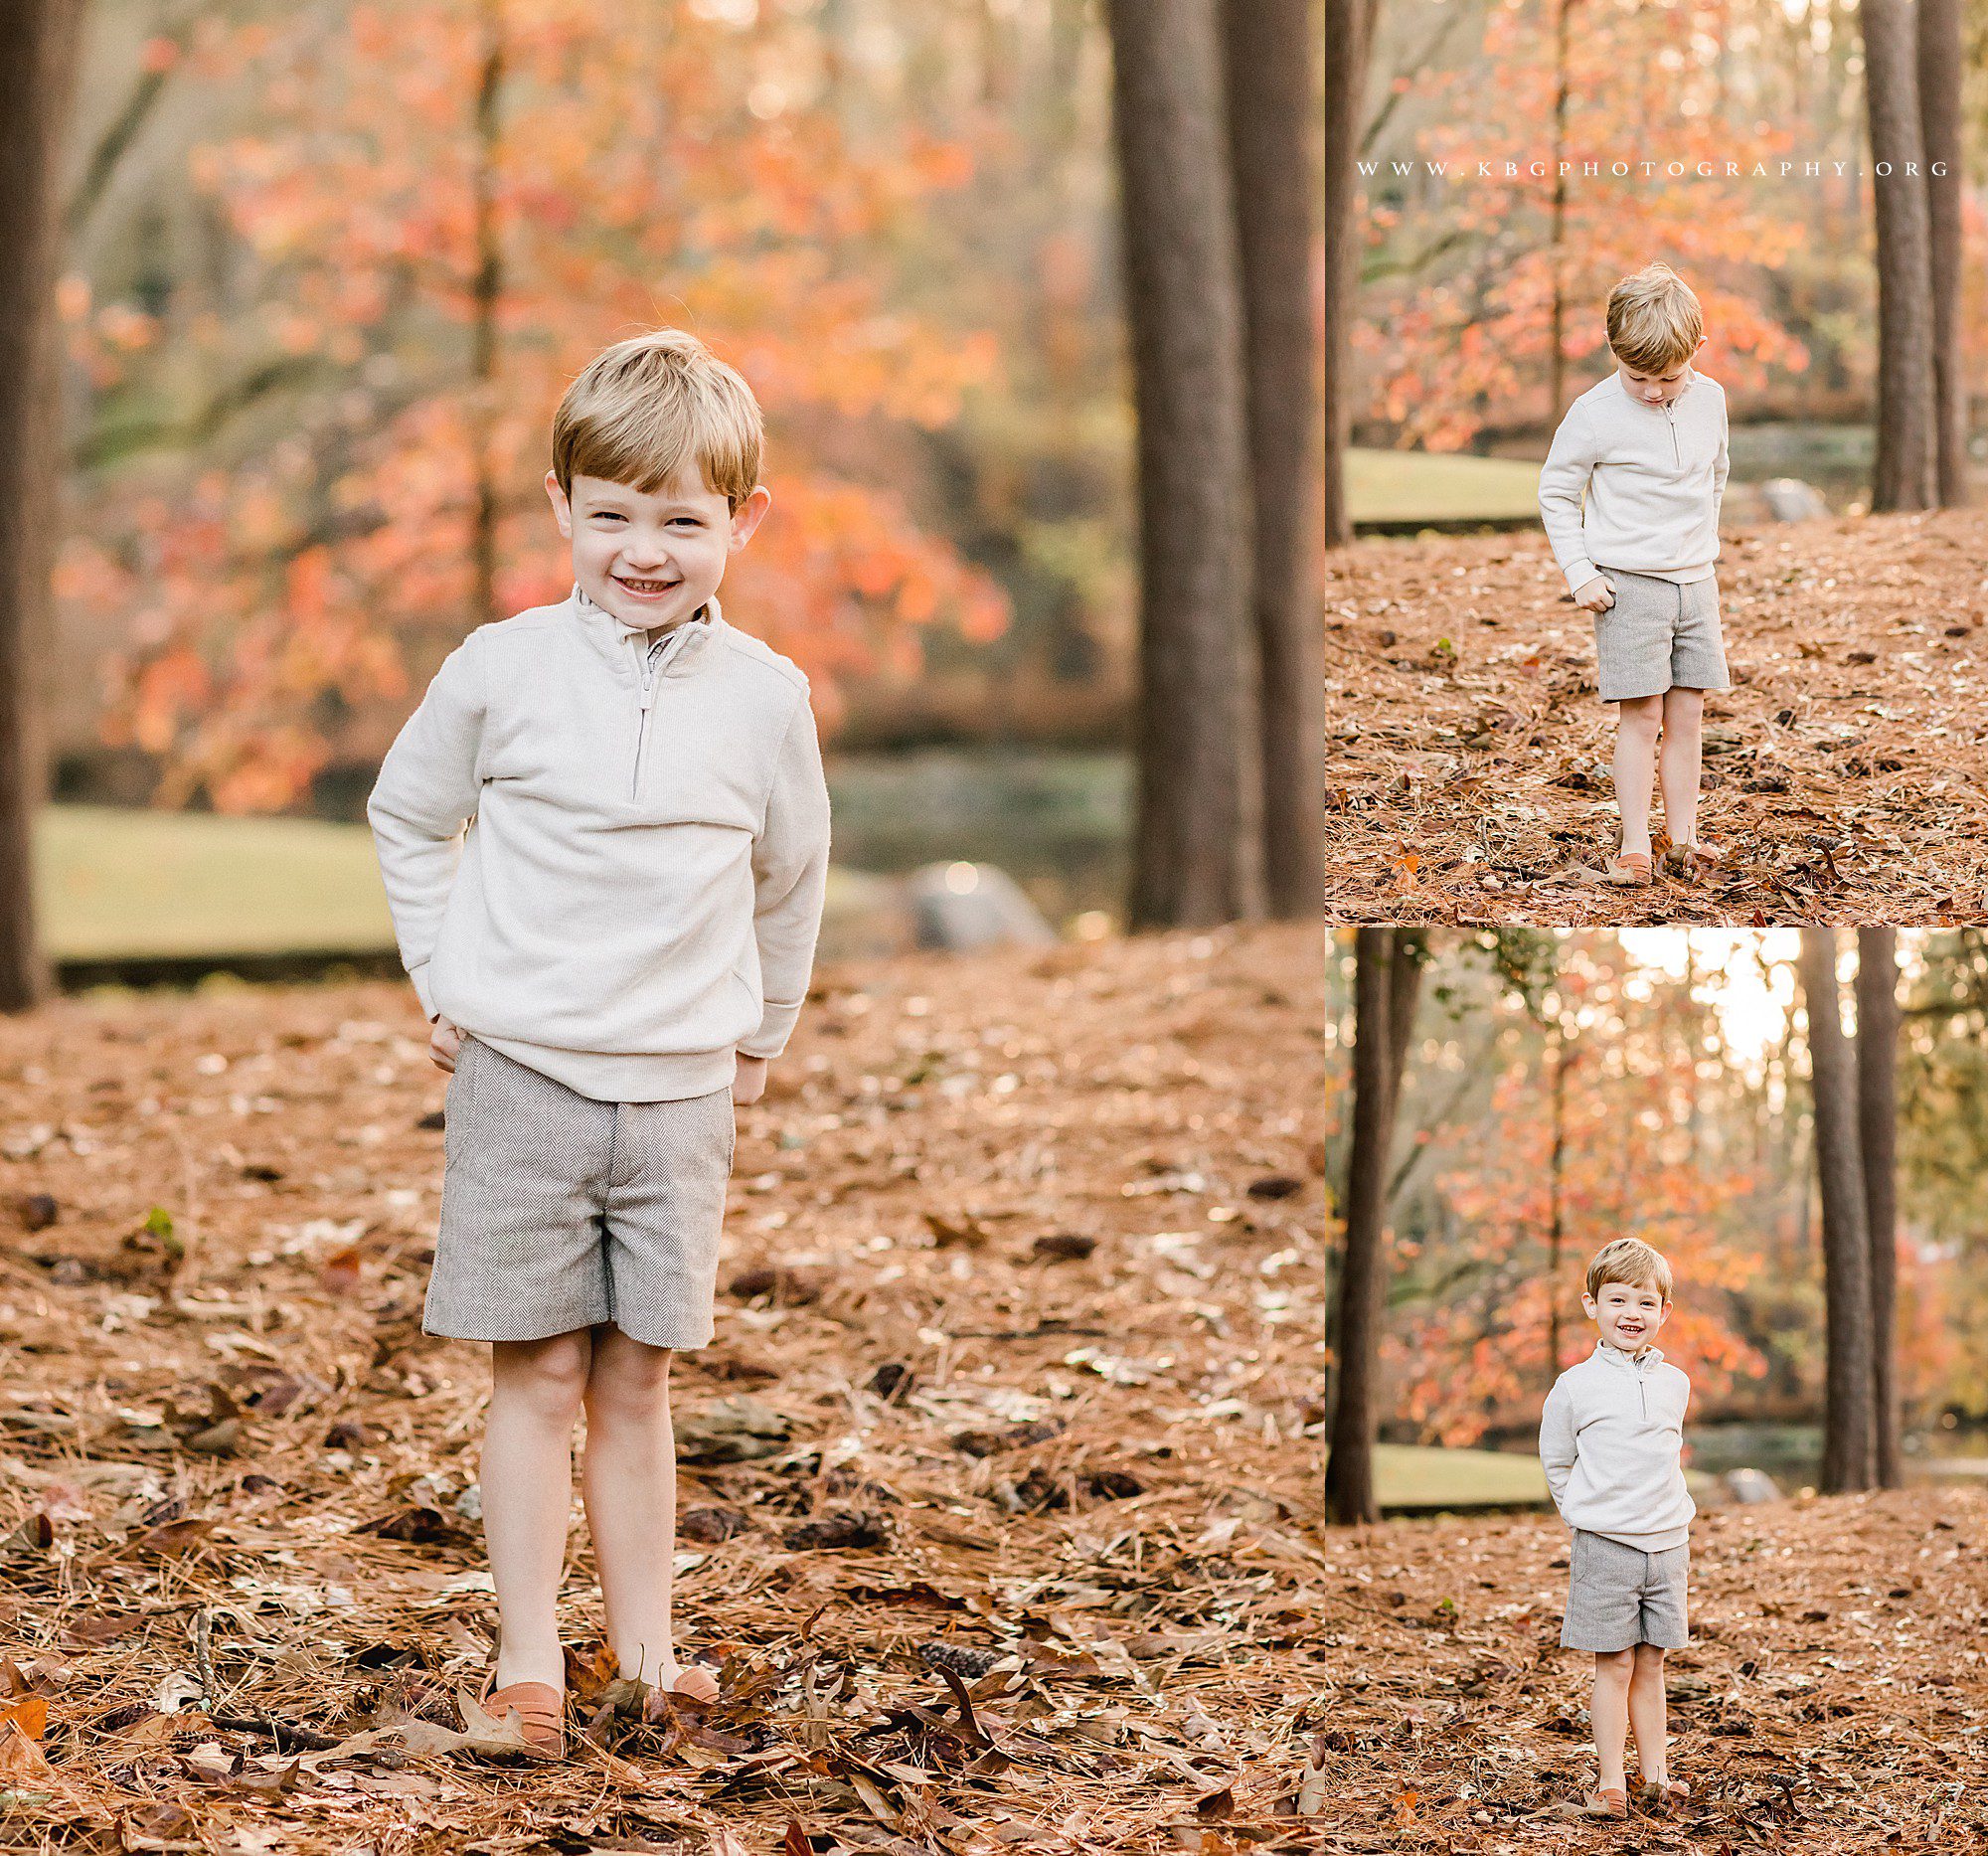 atlanta child photographer - boy posing in the fall leaves